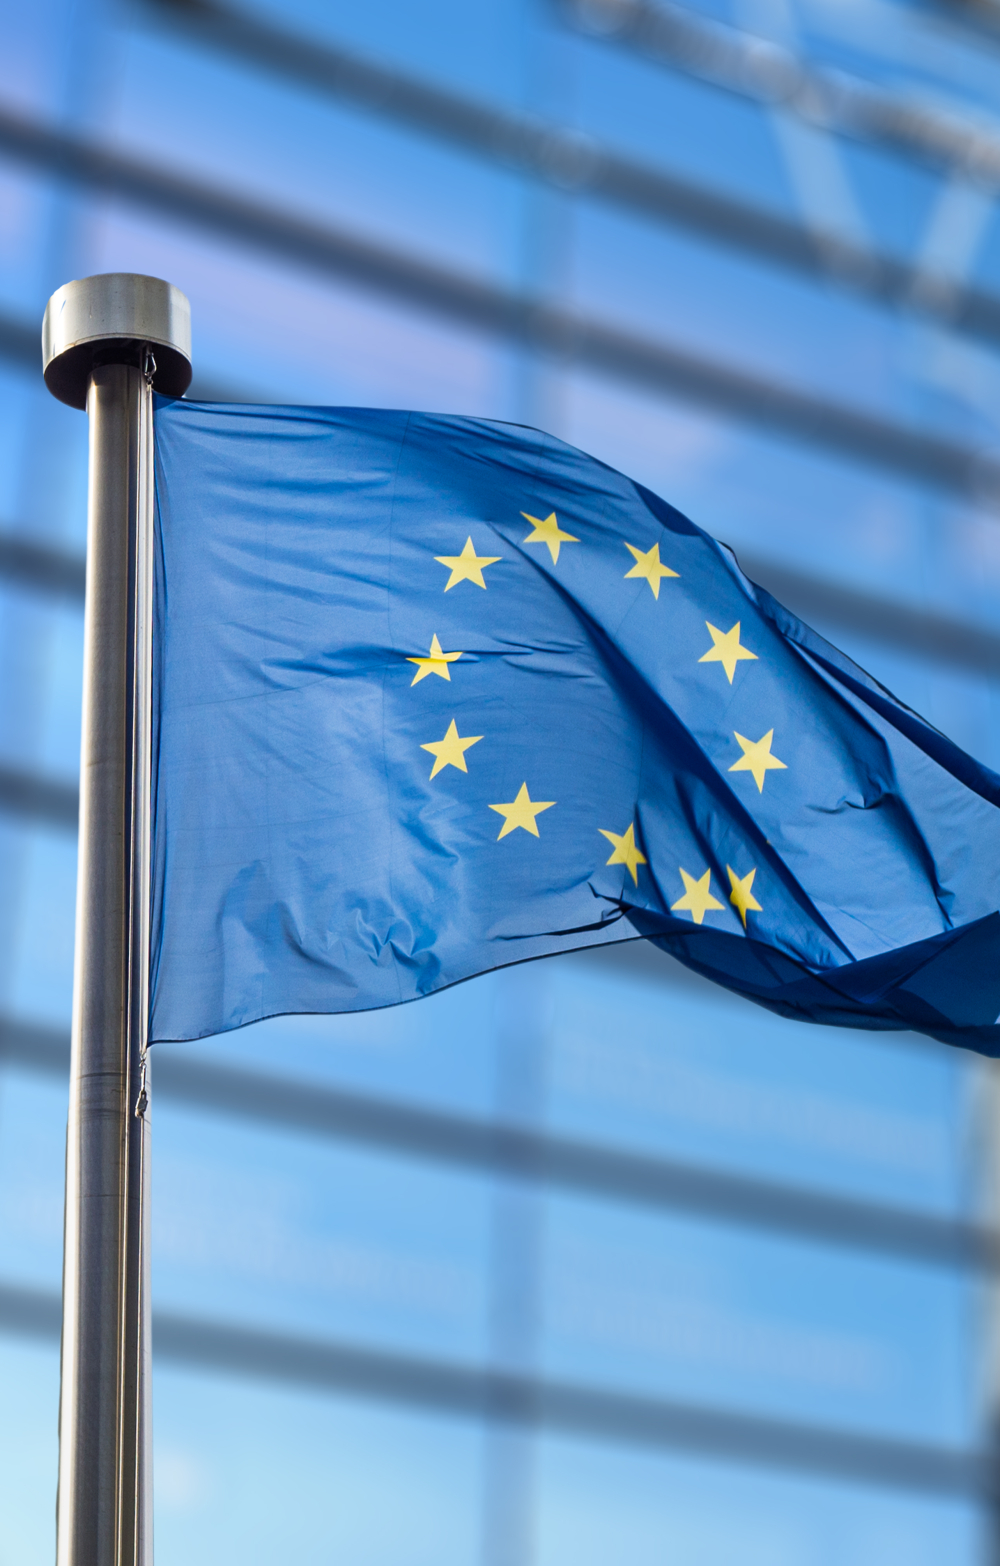 EU Flag against the background of an EU institution building